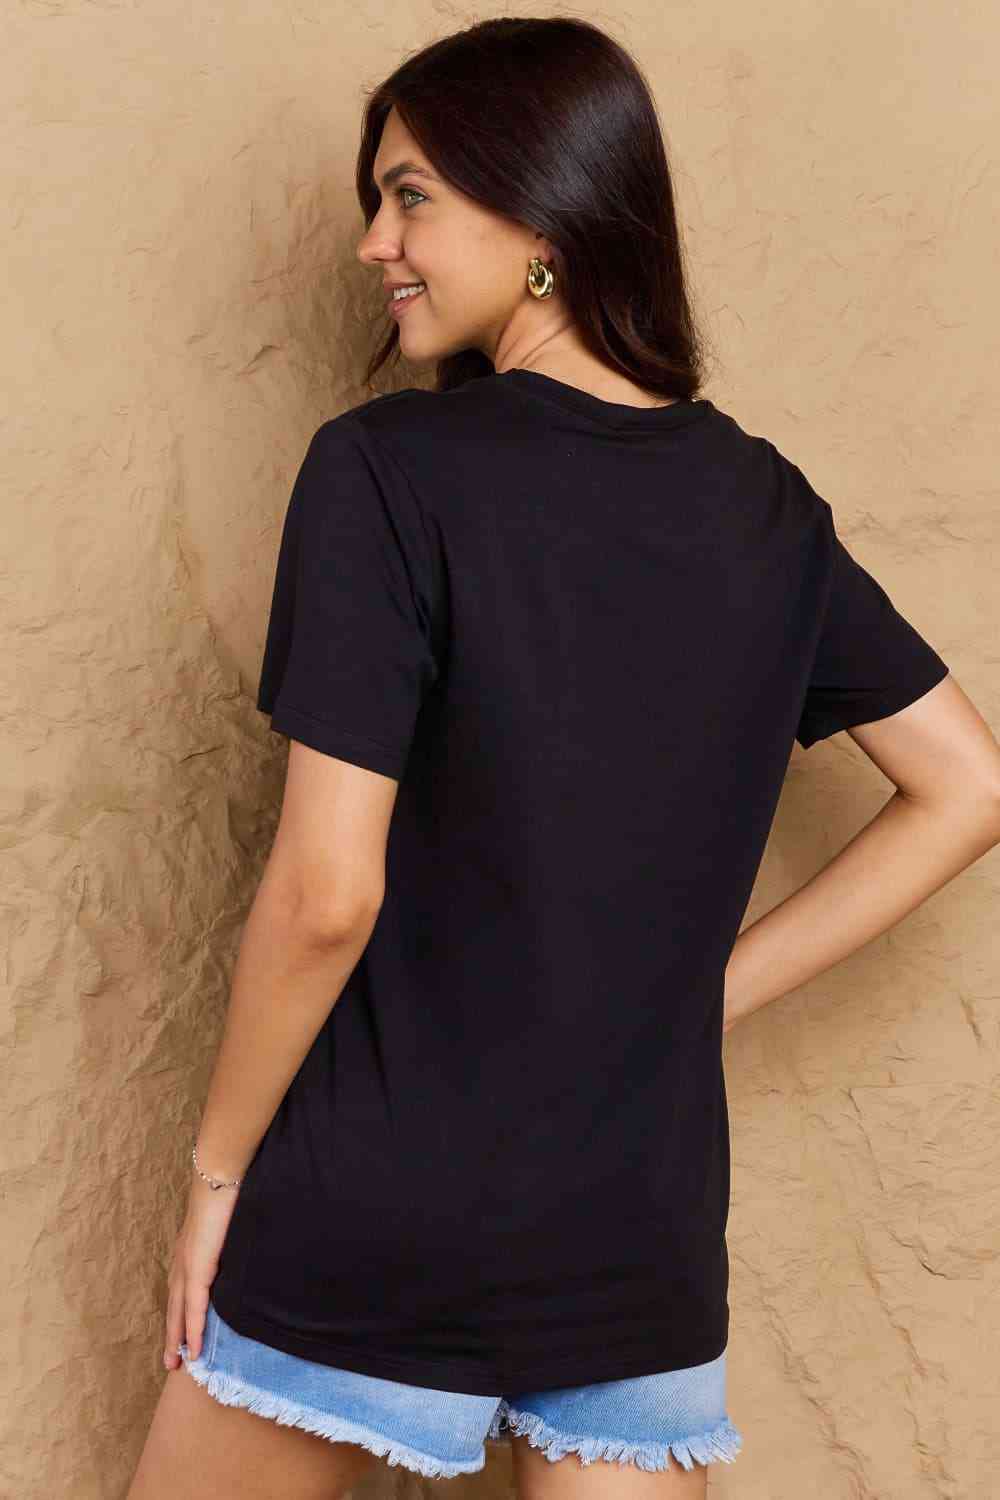 Simply Love Full Size WILD SOUL Graphic Cotton T-Shirt - TRENDMELO